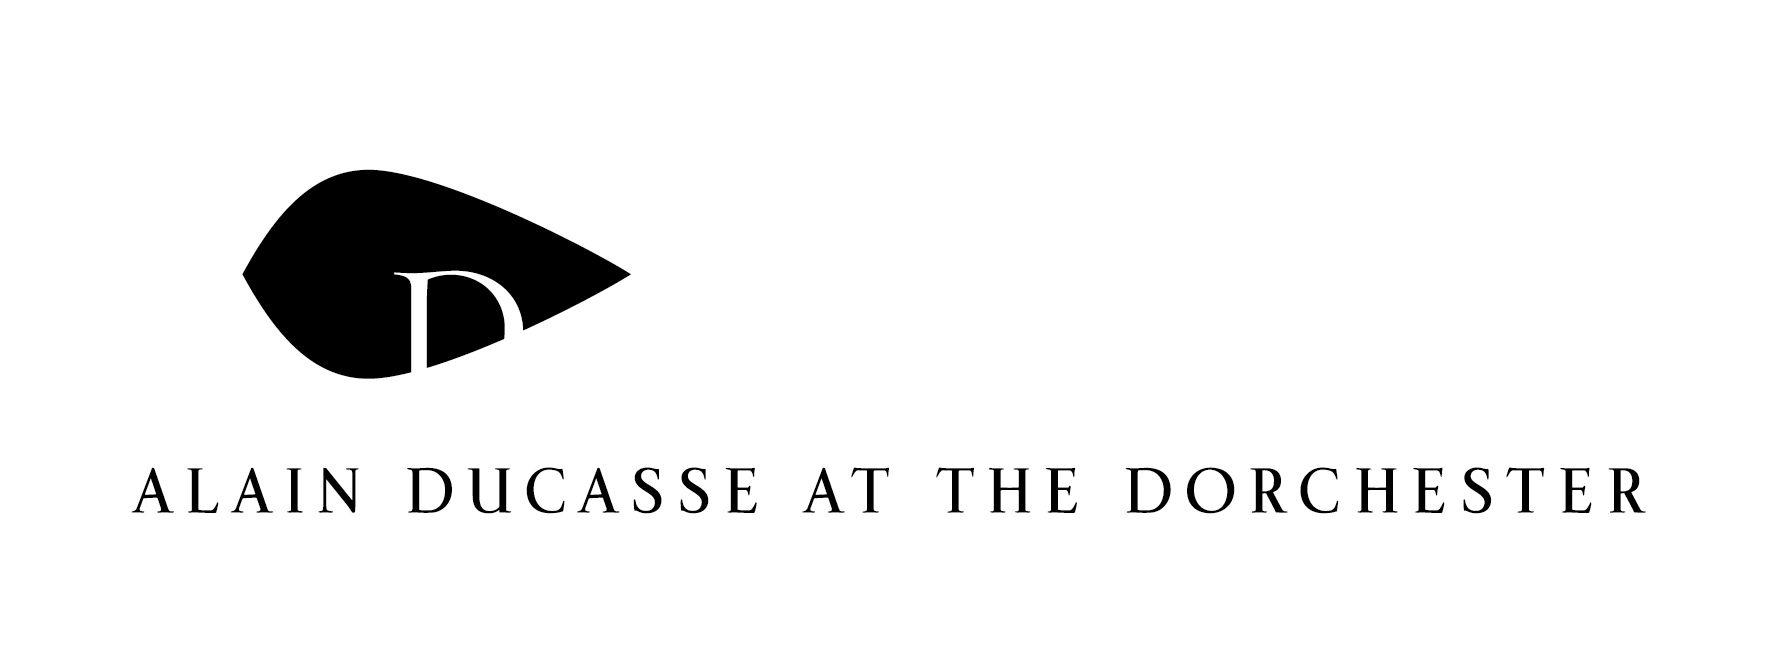 Dorchester Logo - Alain Ducasse at the Dorchester - ANM